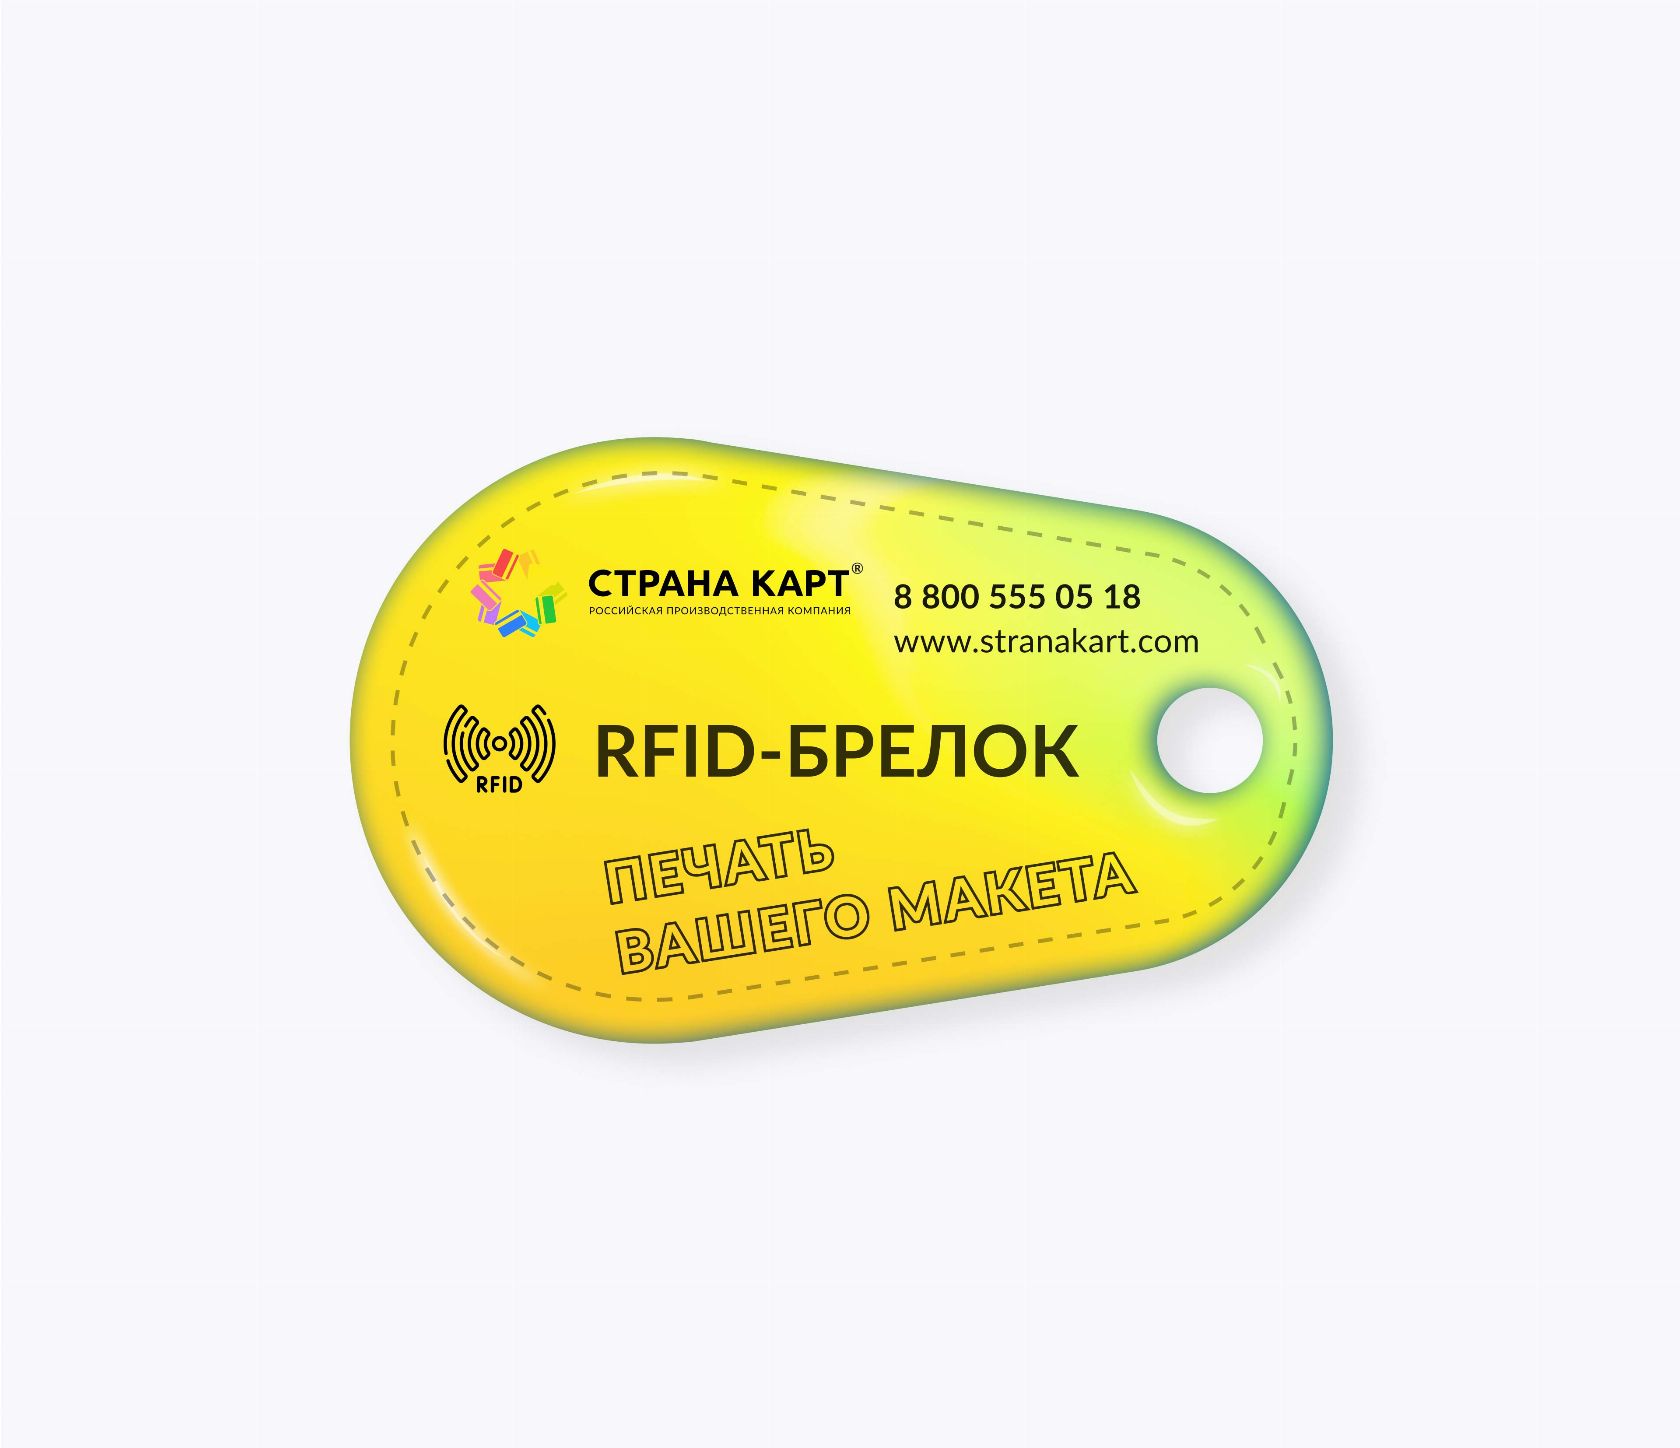 Каплевидные RFID-брелоки NEOKEY® с чипом NXP MIFARE Ultralight 7 byte UID RFID-брелоки NEOKEY® с чипом NXP MIFARE Ultralight 7 byte UID и вашим логотипом